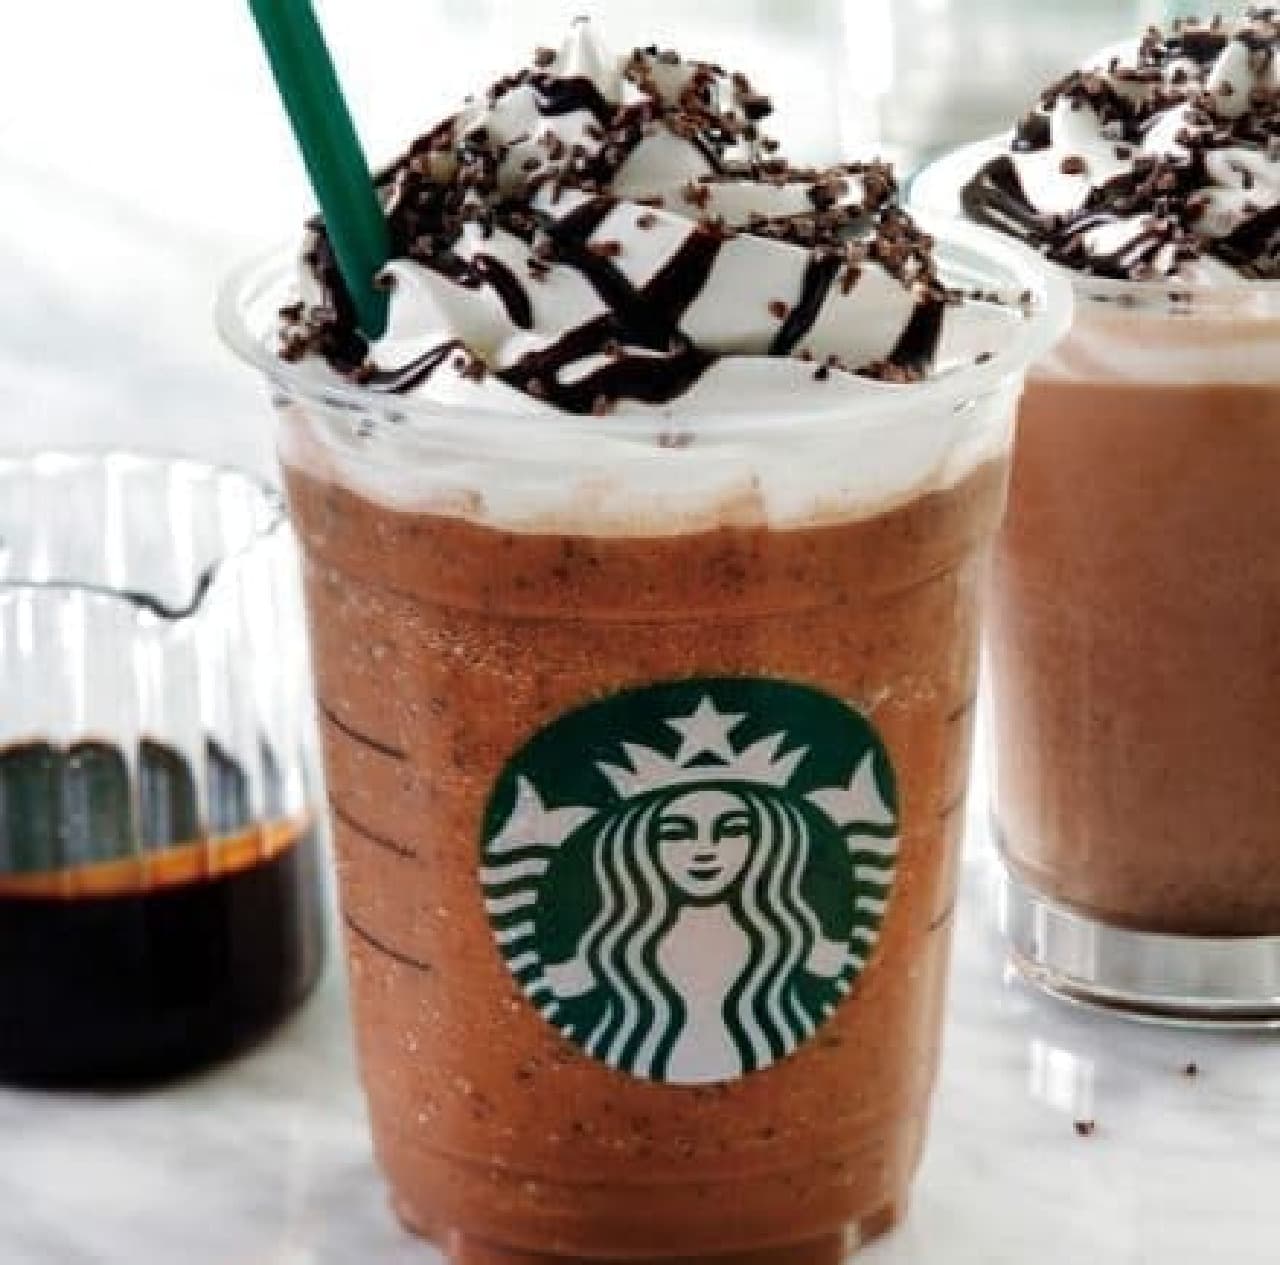 Starbucks "Minty Chocolate Tea Frappuccino"